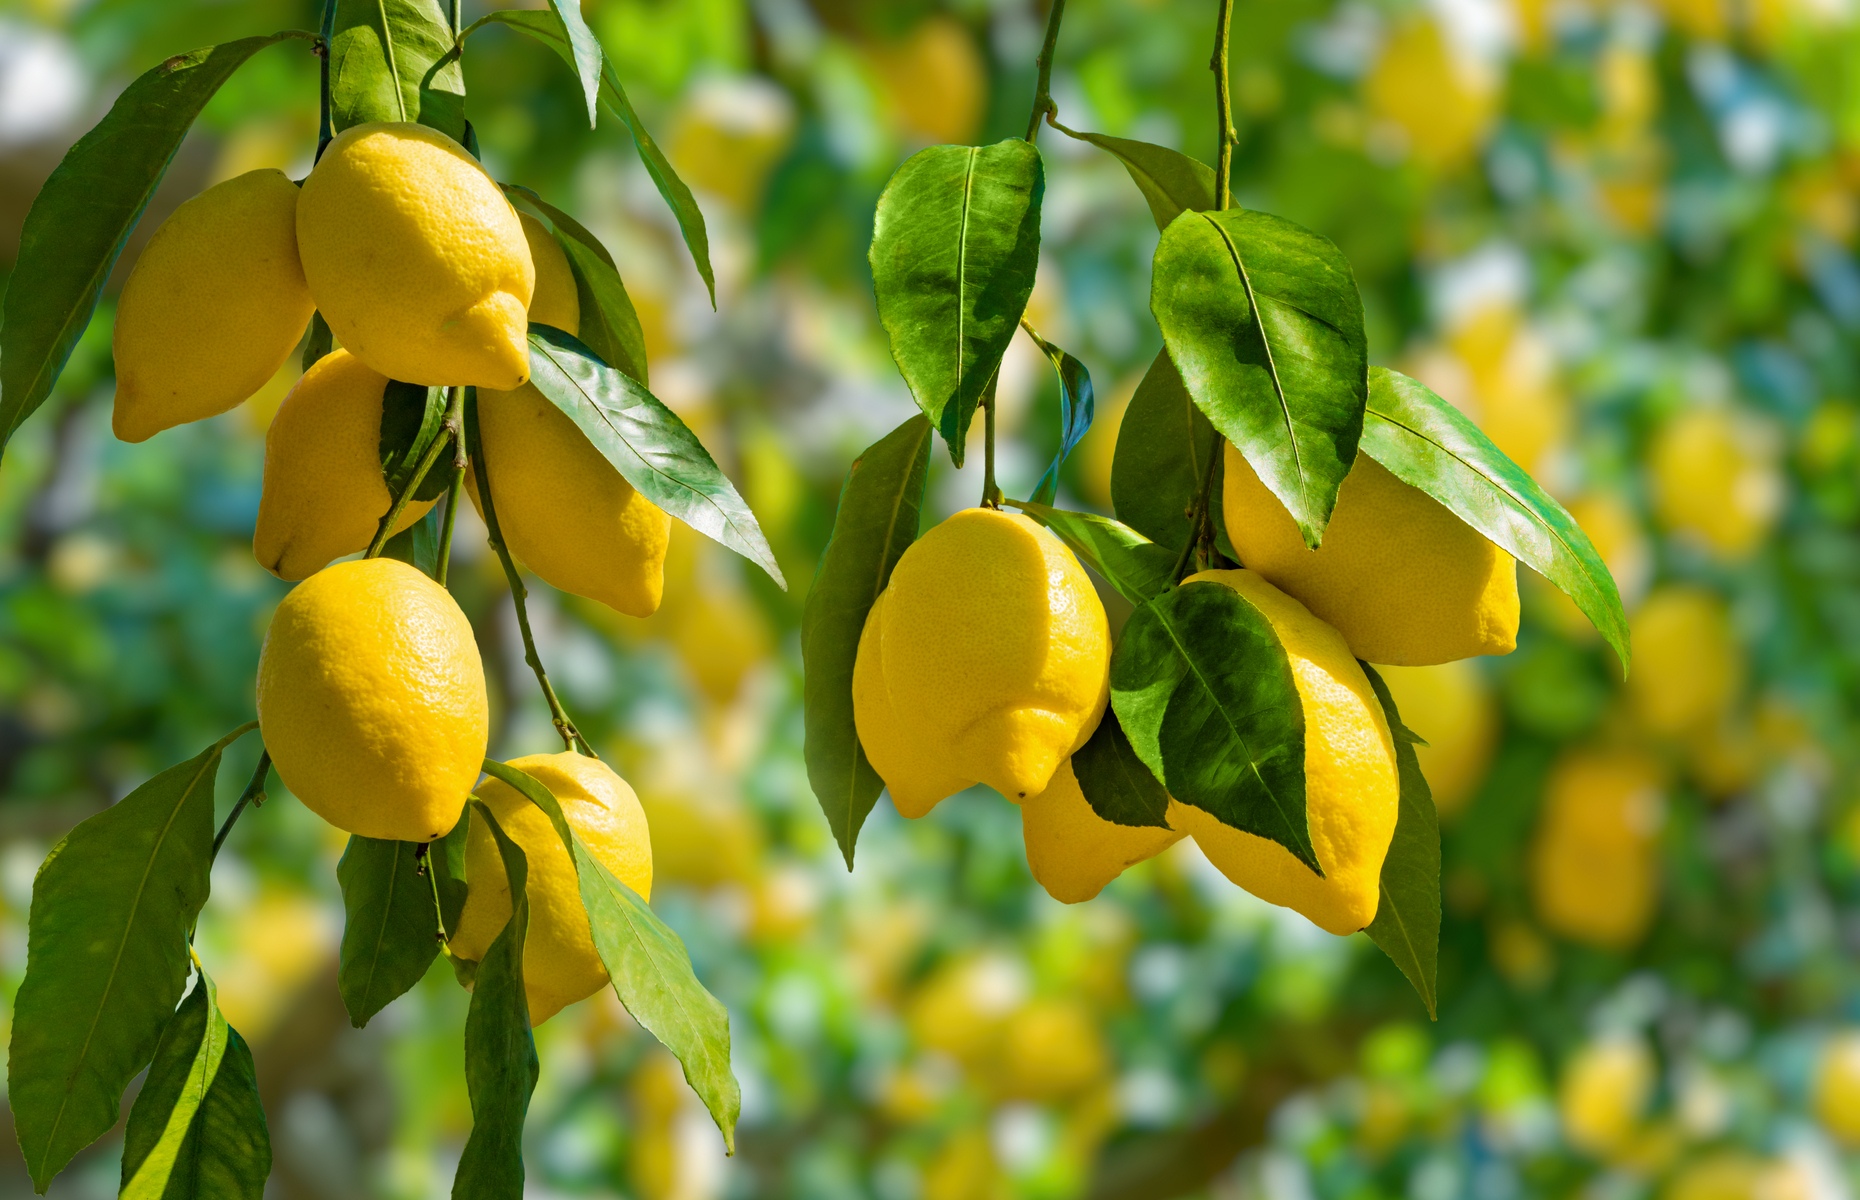 Lemon tree (Image: IgorZh/Shutterstock)